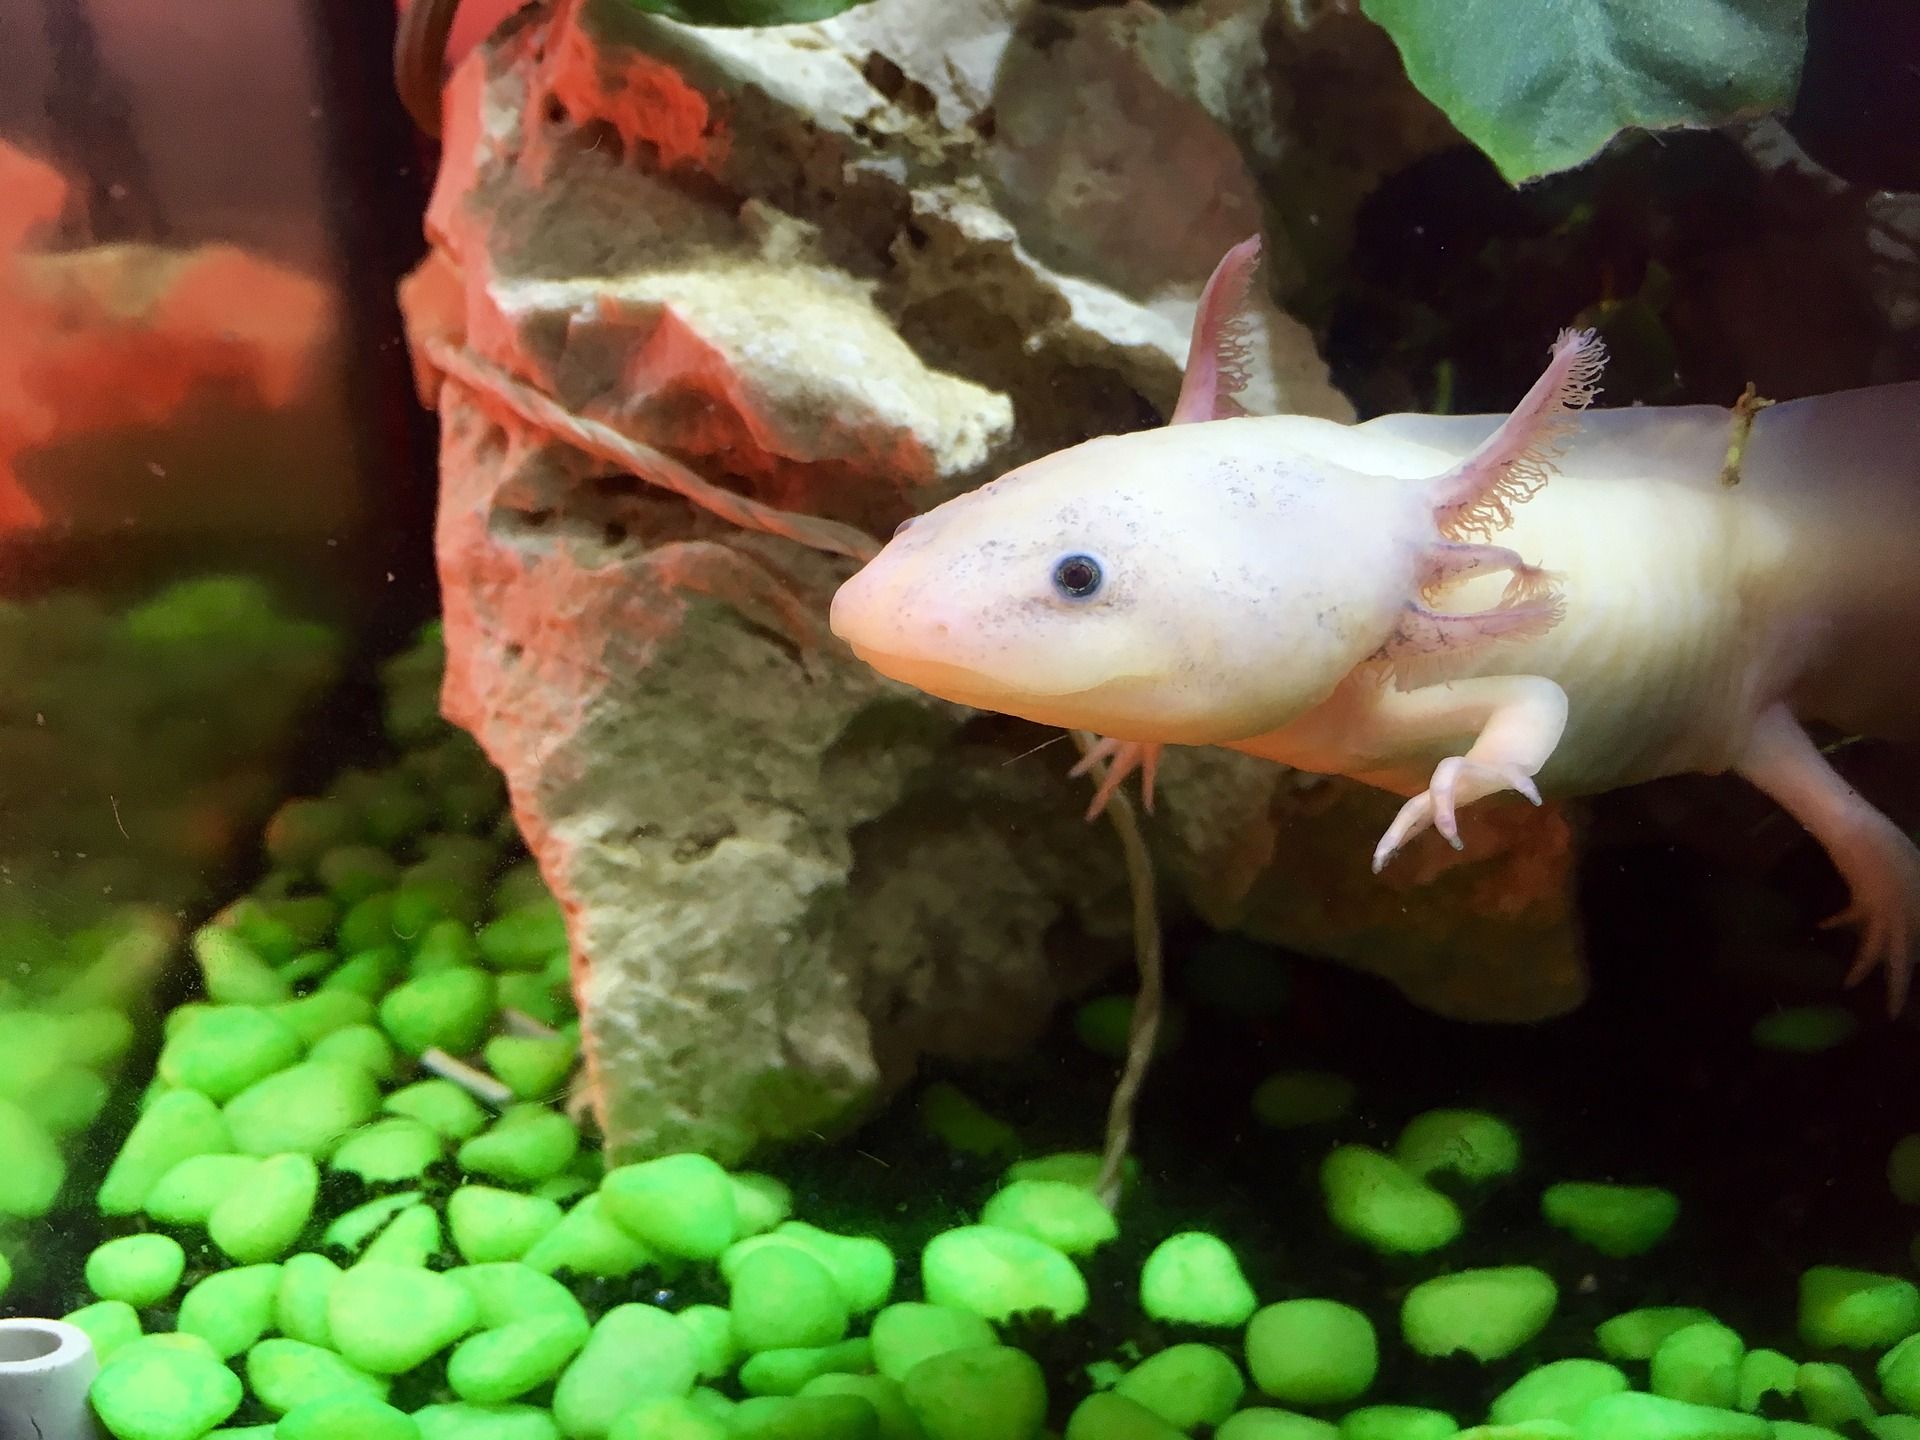 Axolotl being cute